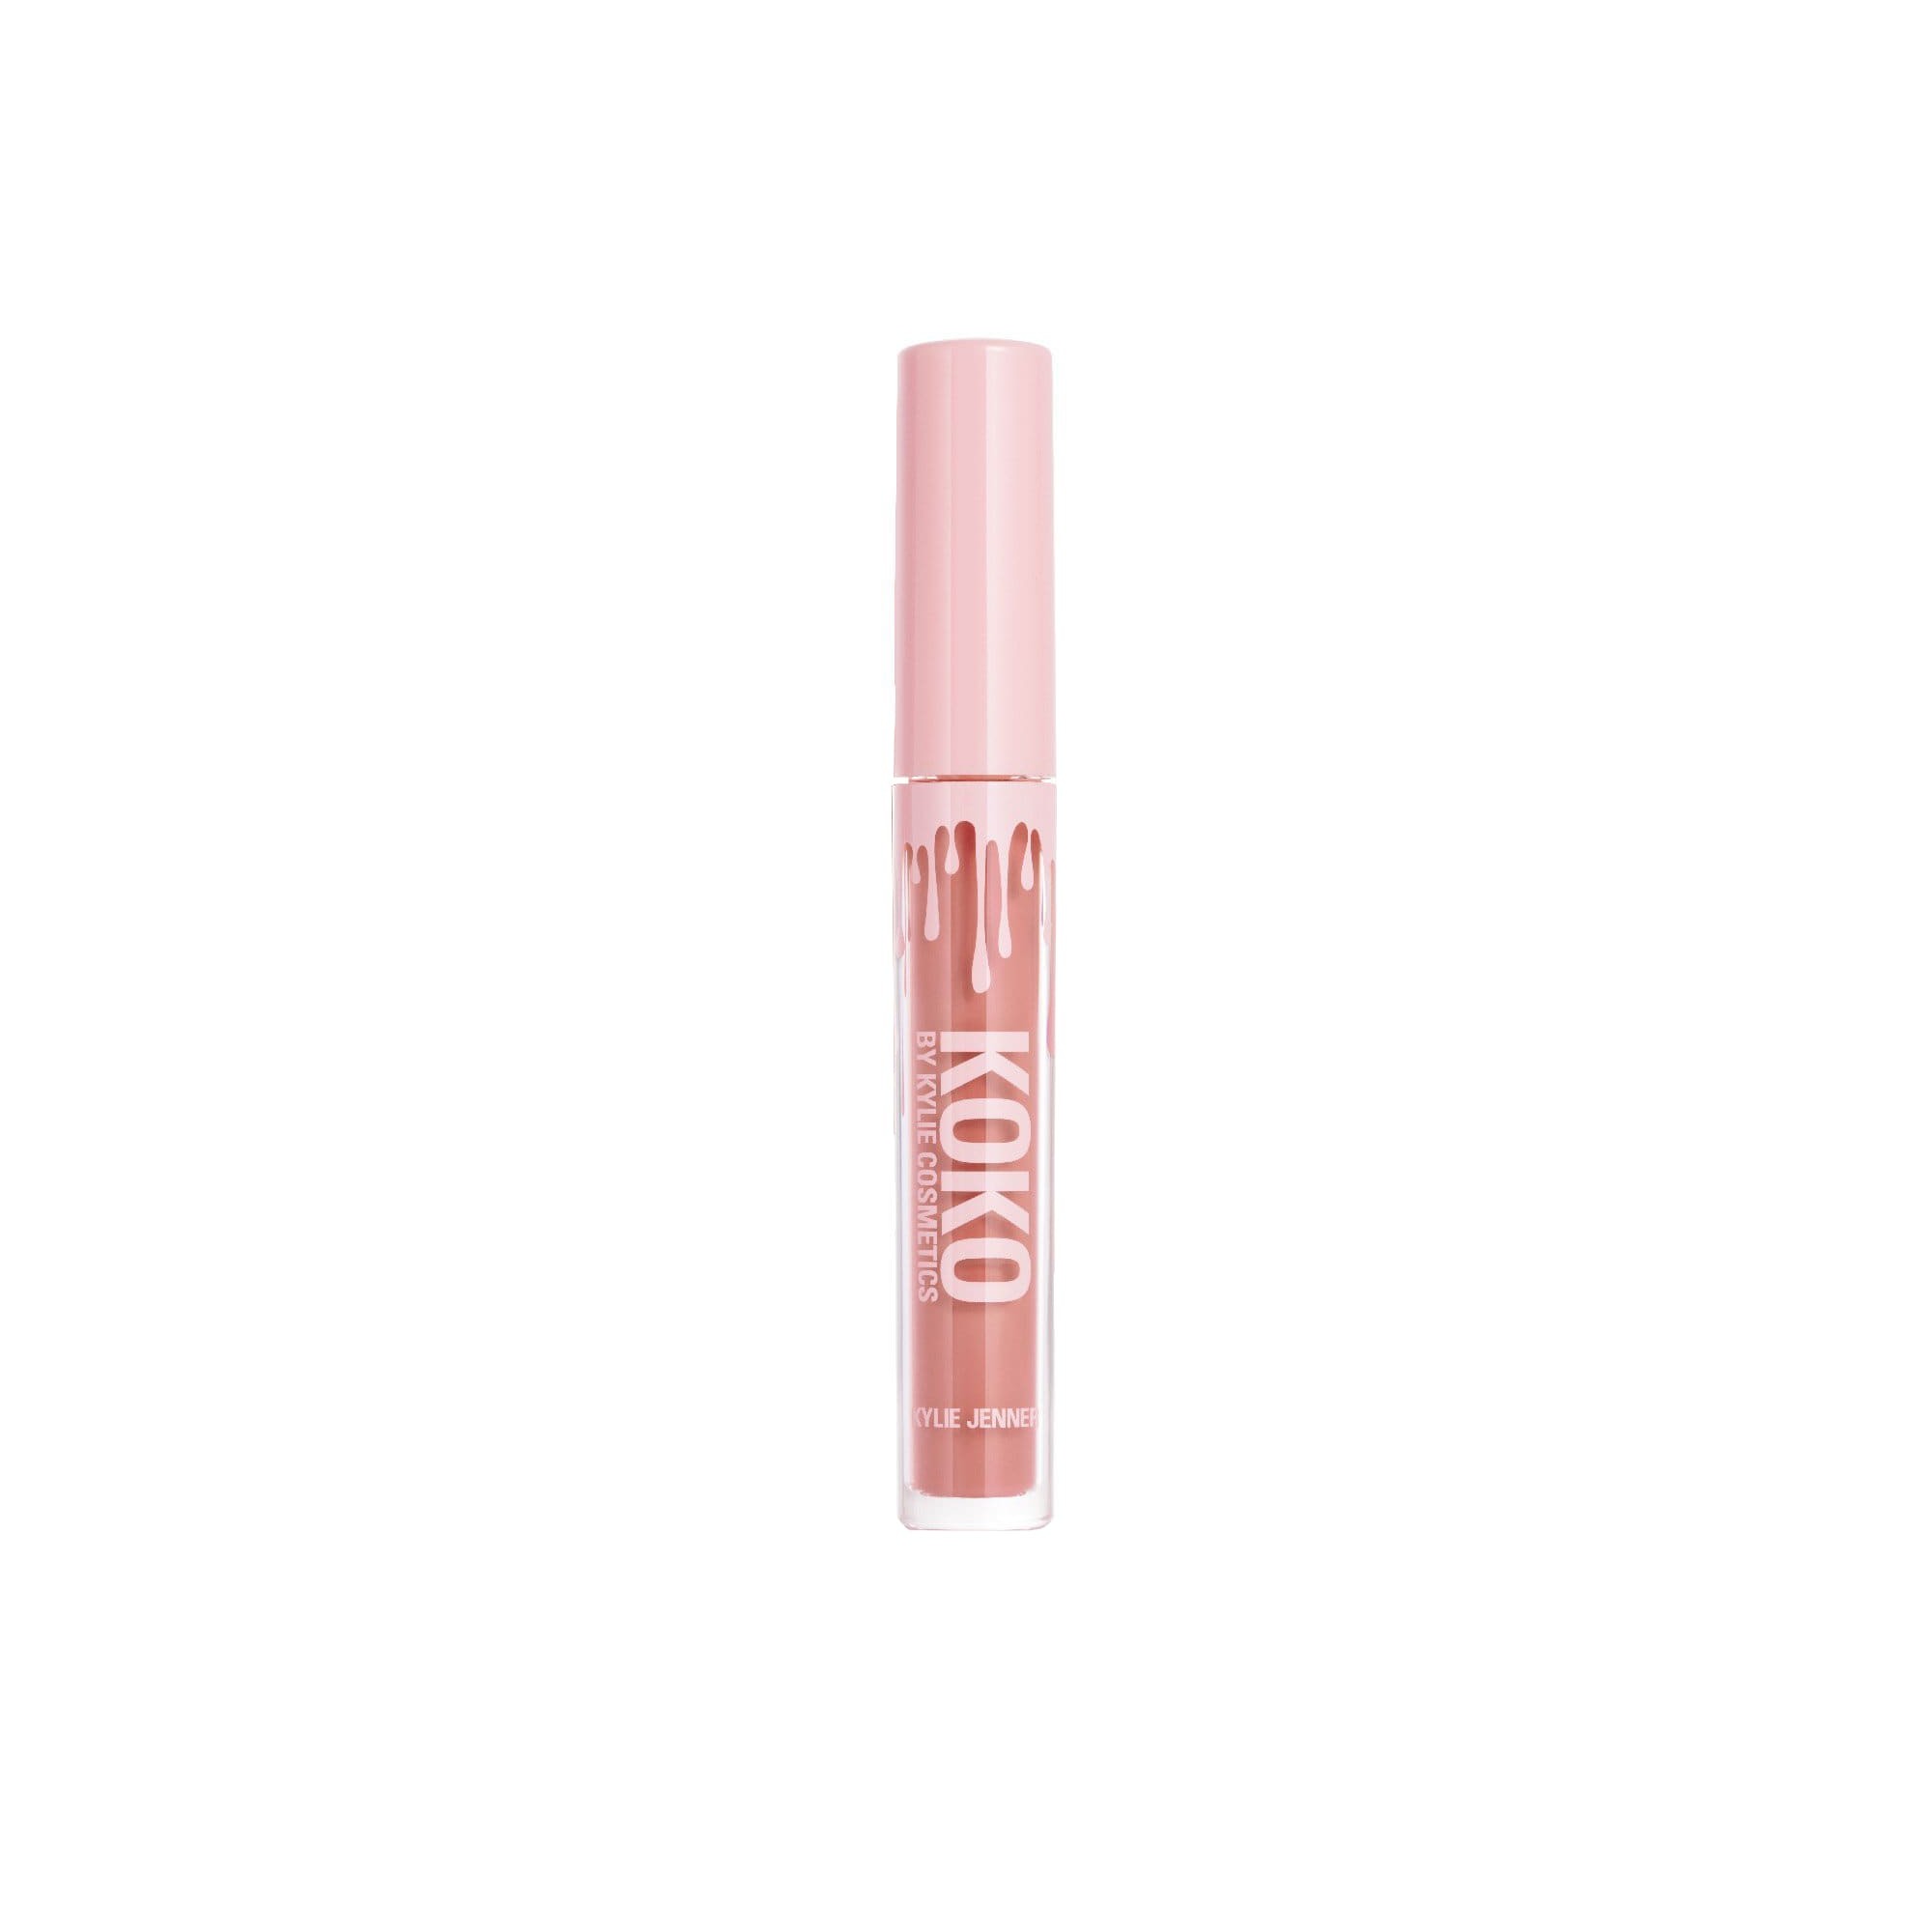 Kylie Cosmetics Allergic to Bullsh*t Matte Liquid Lipstick